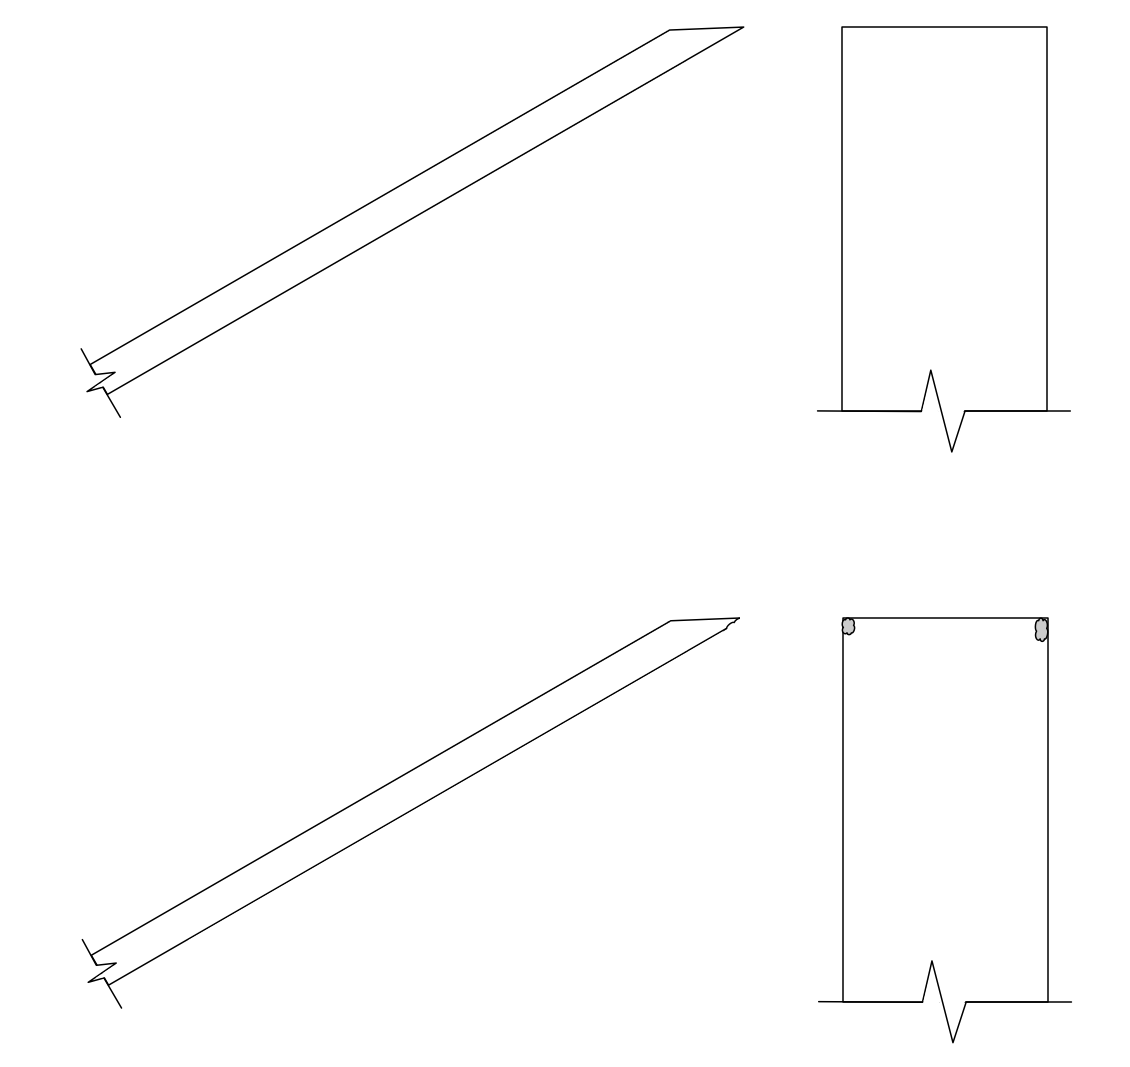 Ideal chisel geometry (top) versus my chisel (bottom)